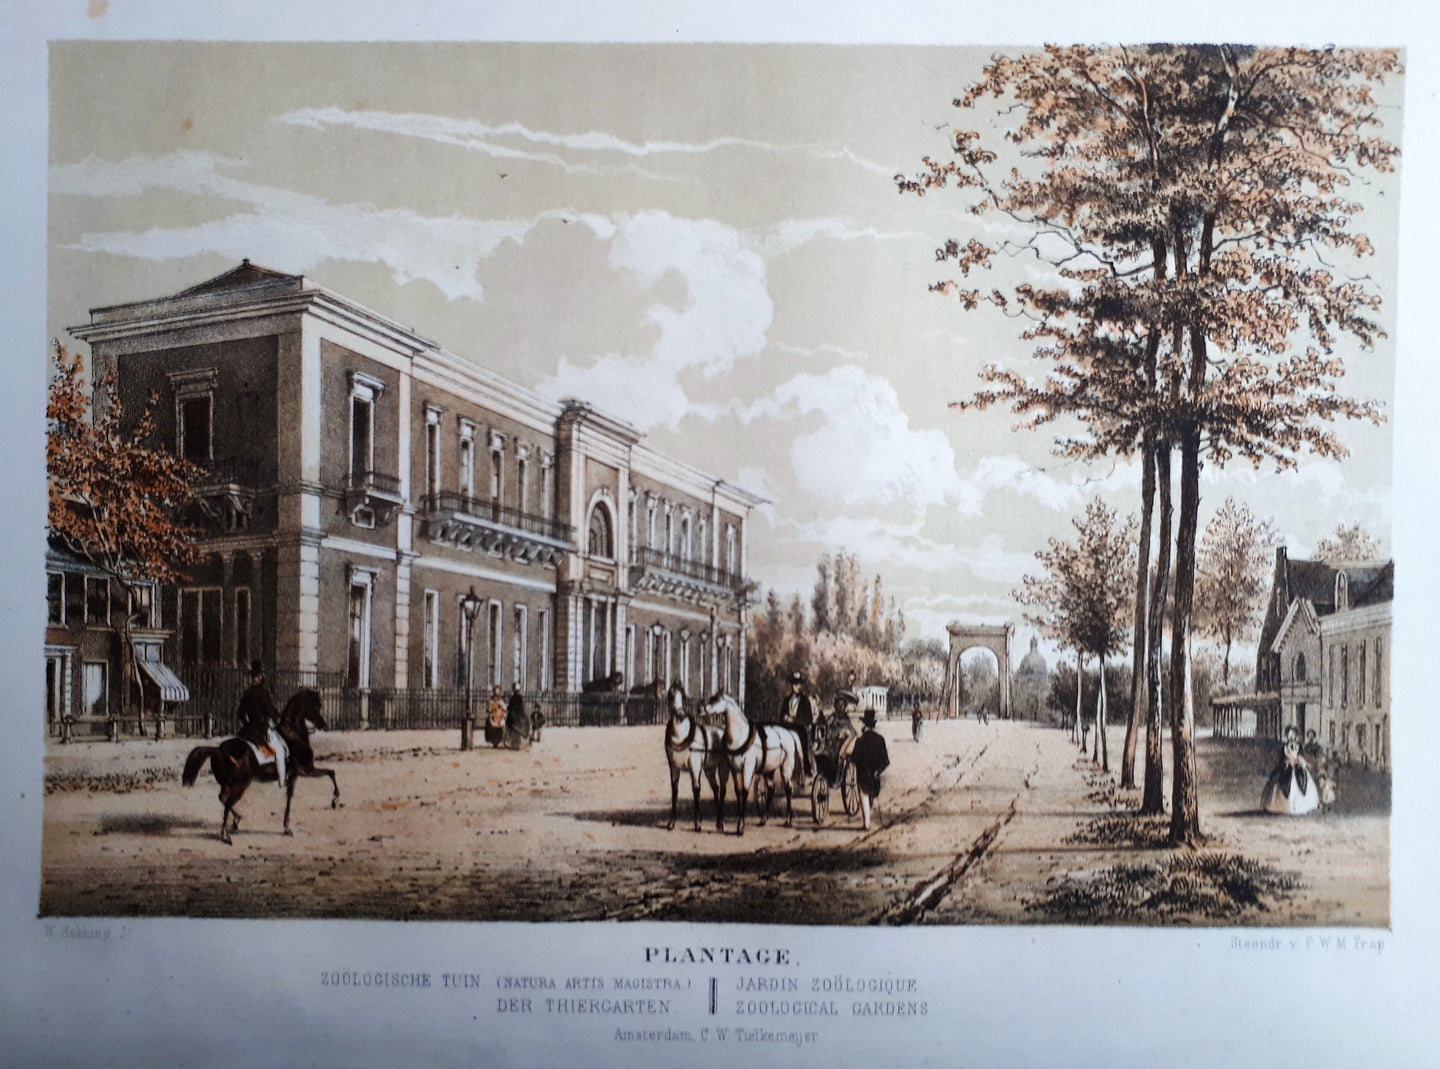 AMSTERDAM Plantage Middenlaan Artis - W Hekking jr/ GW Tielkemeijer - 1869